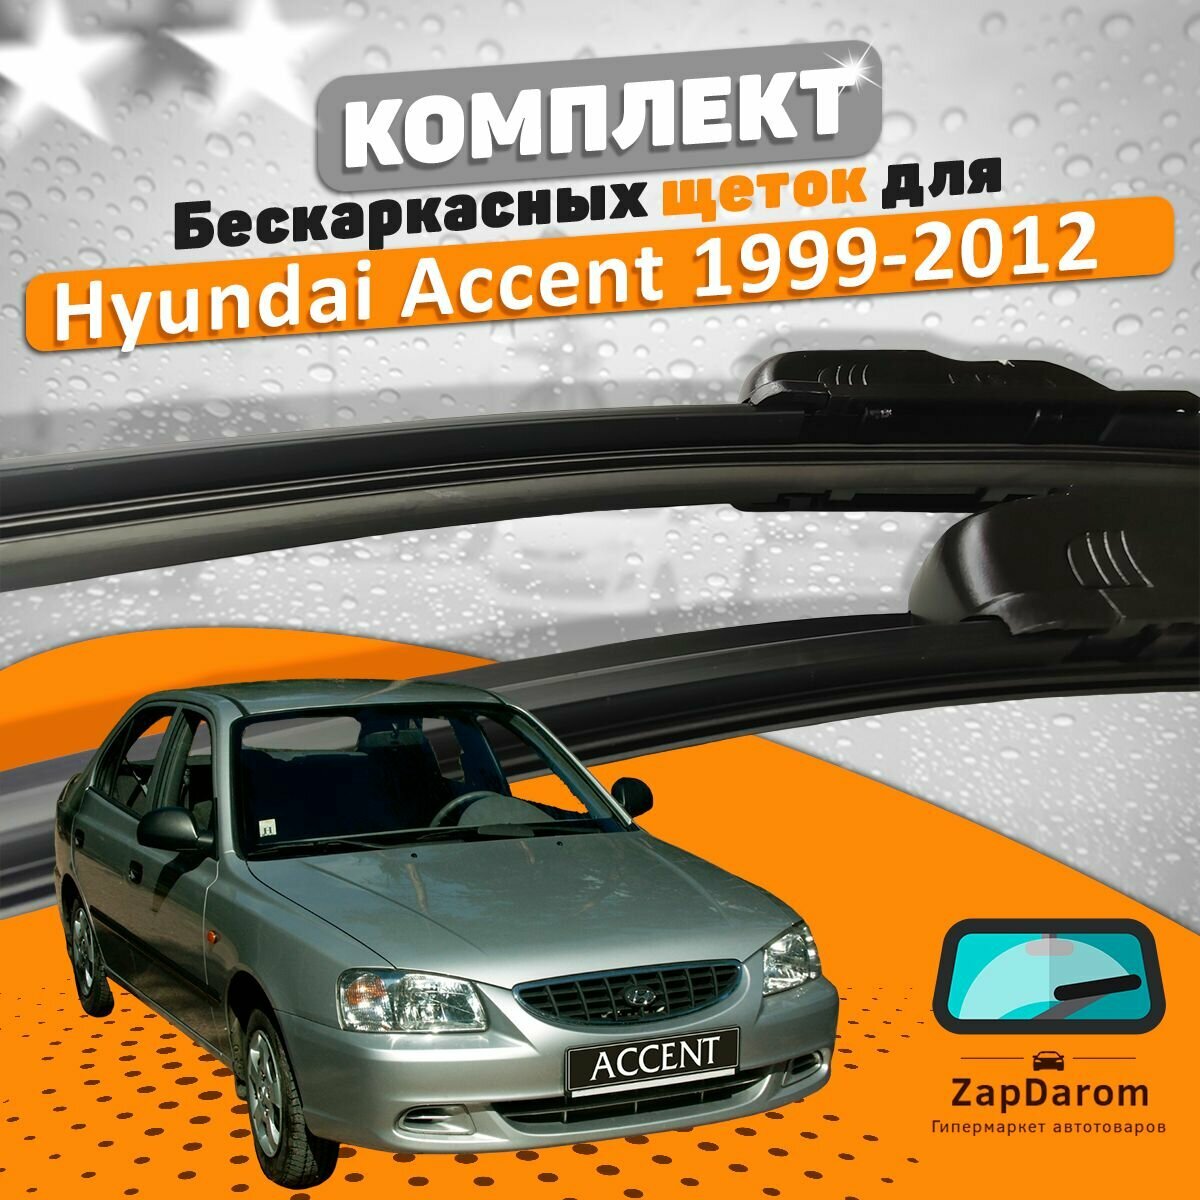 Щетки комплект Hyundai Accent Тагаз 1999-2012 (500 и 450 мм) / Дворники Хундай Акцент